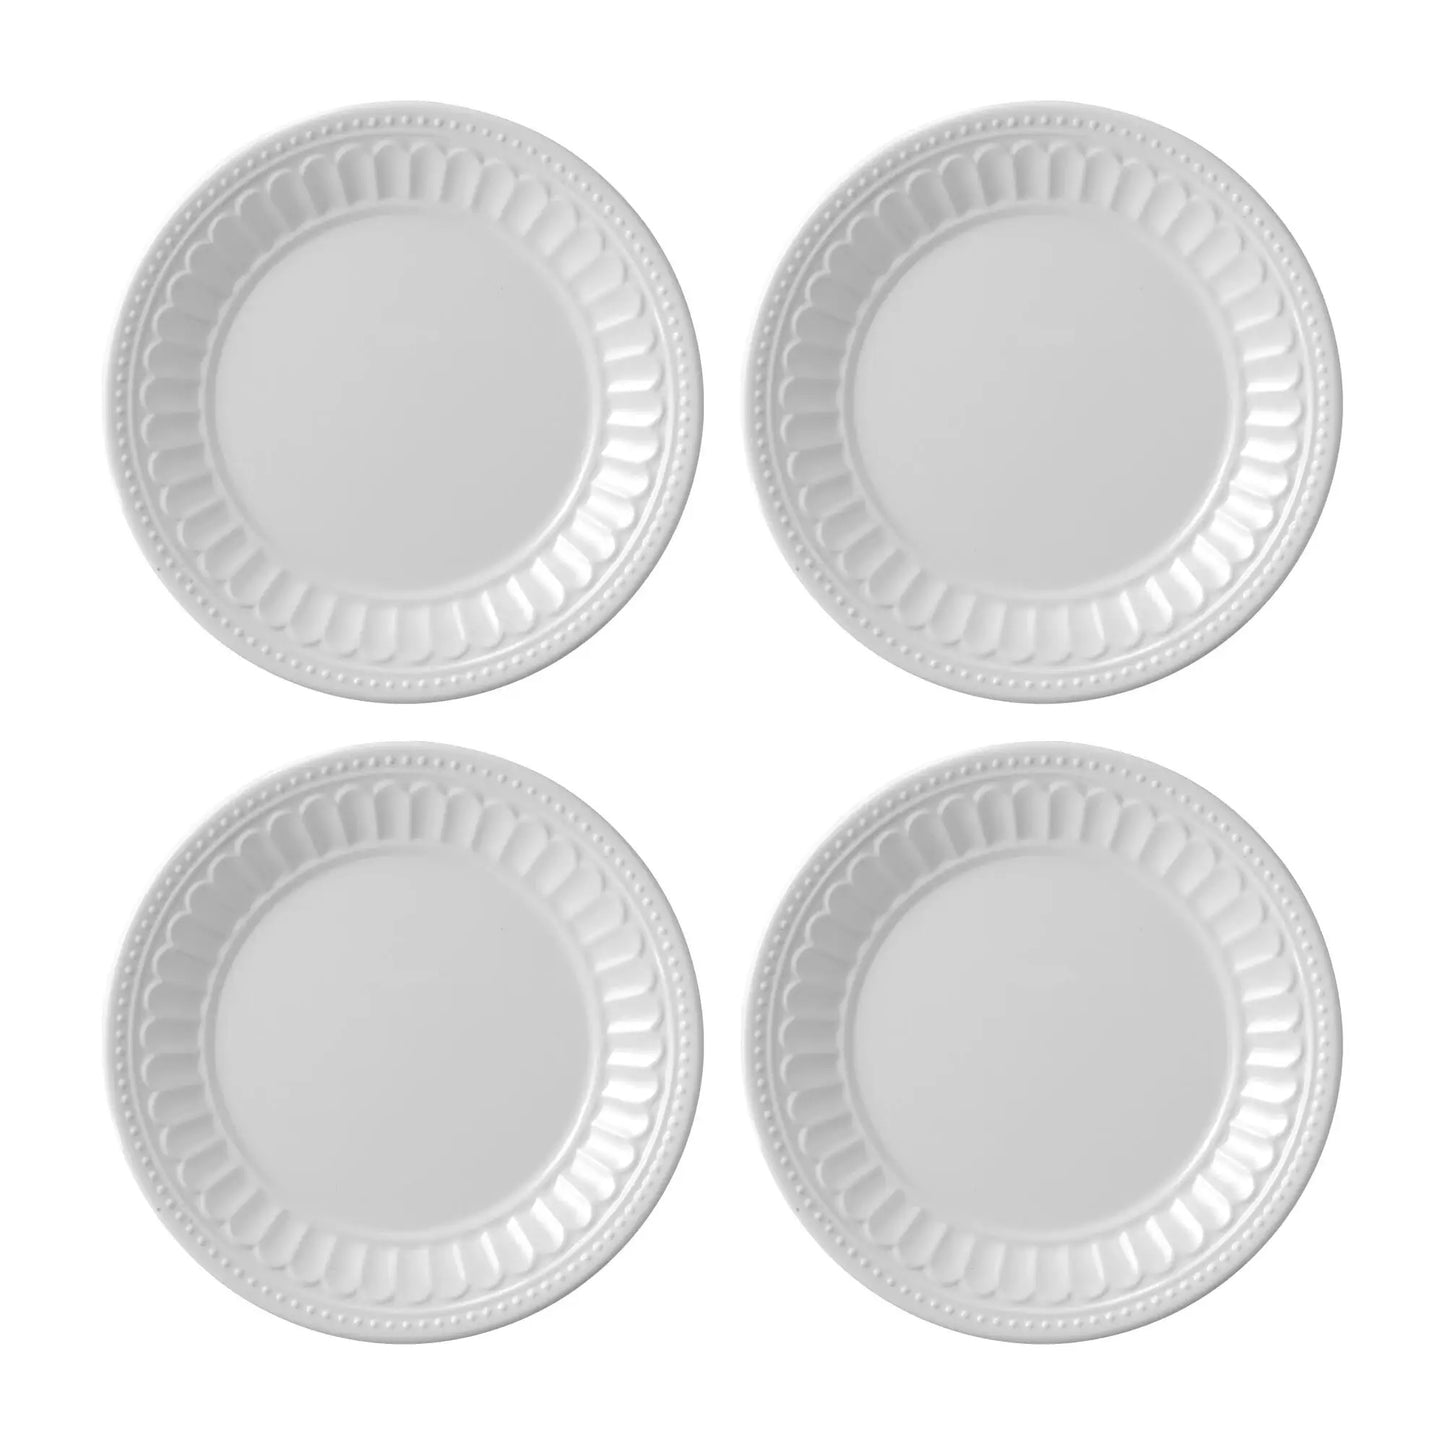 Decorative White Melamine Plate